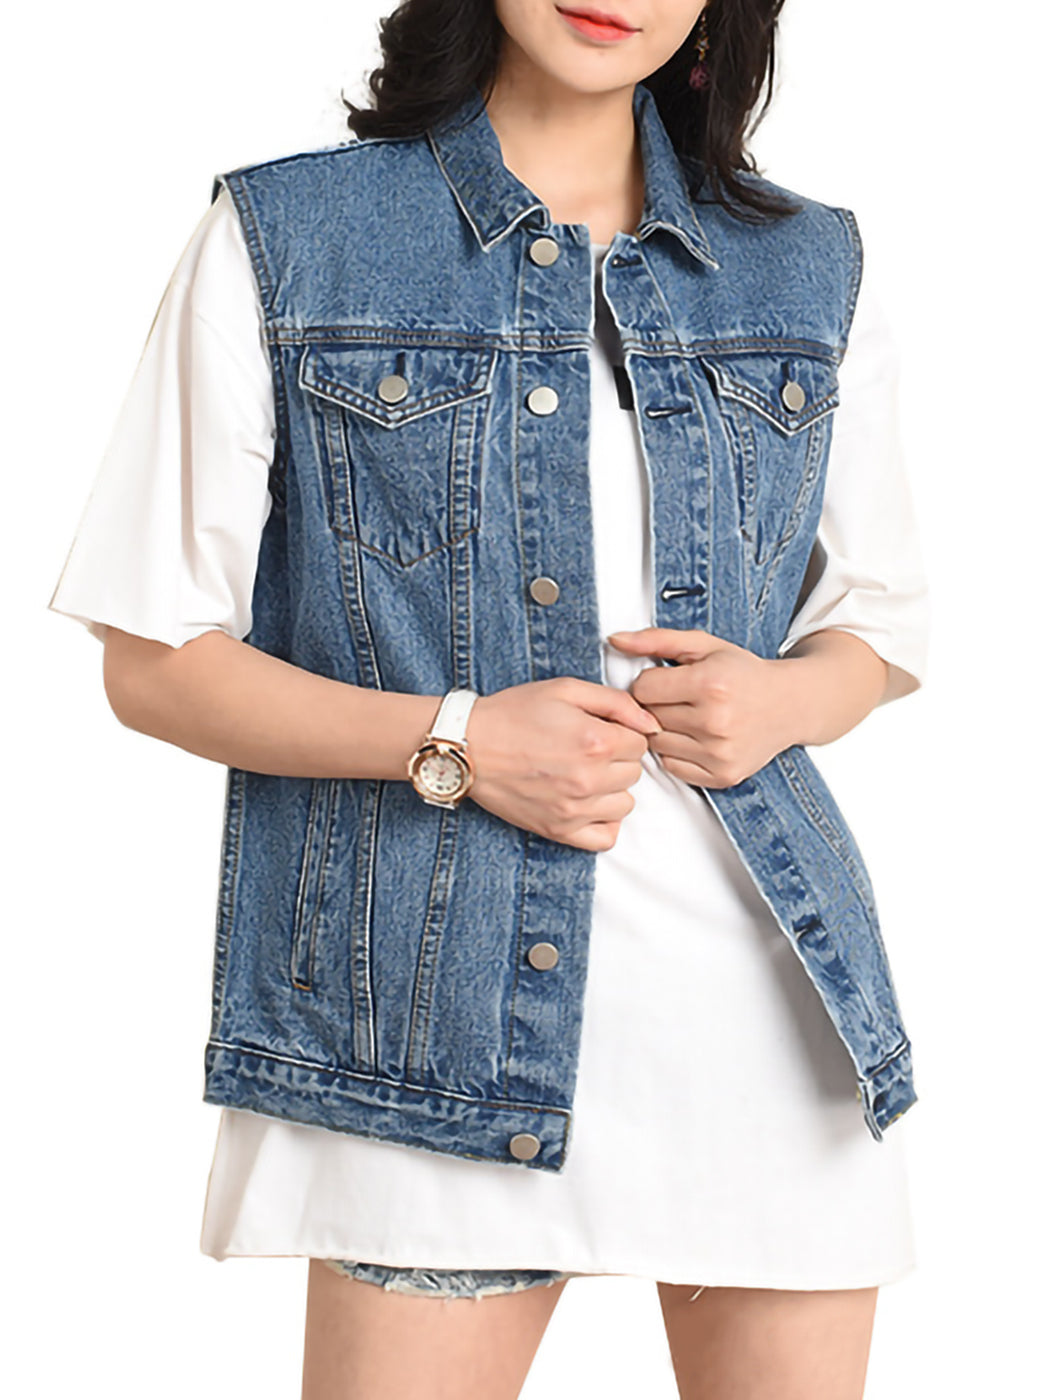 Loose Sleeveless Button up Jean Denim Jacket Vest